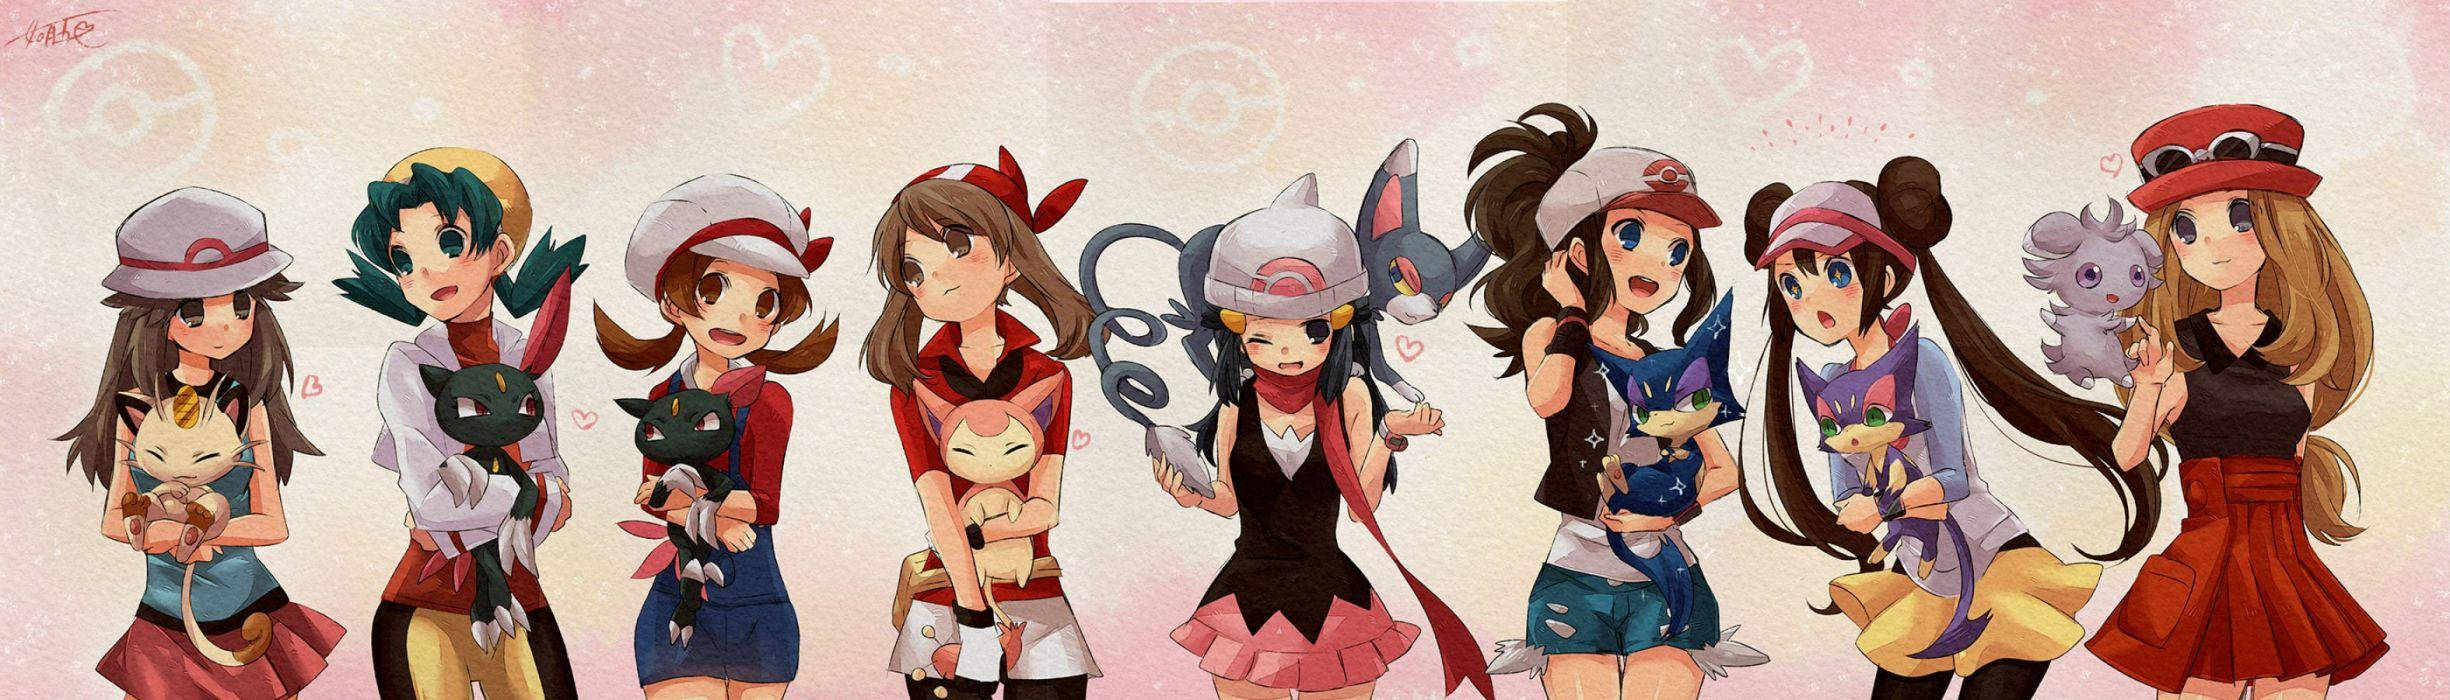 Girls With Pokemon Like Sneasel Wallpaper